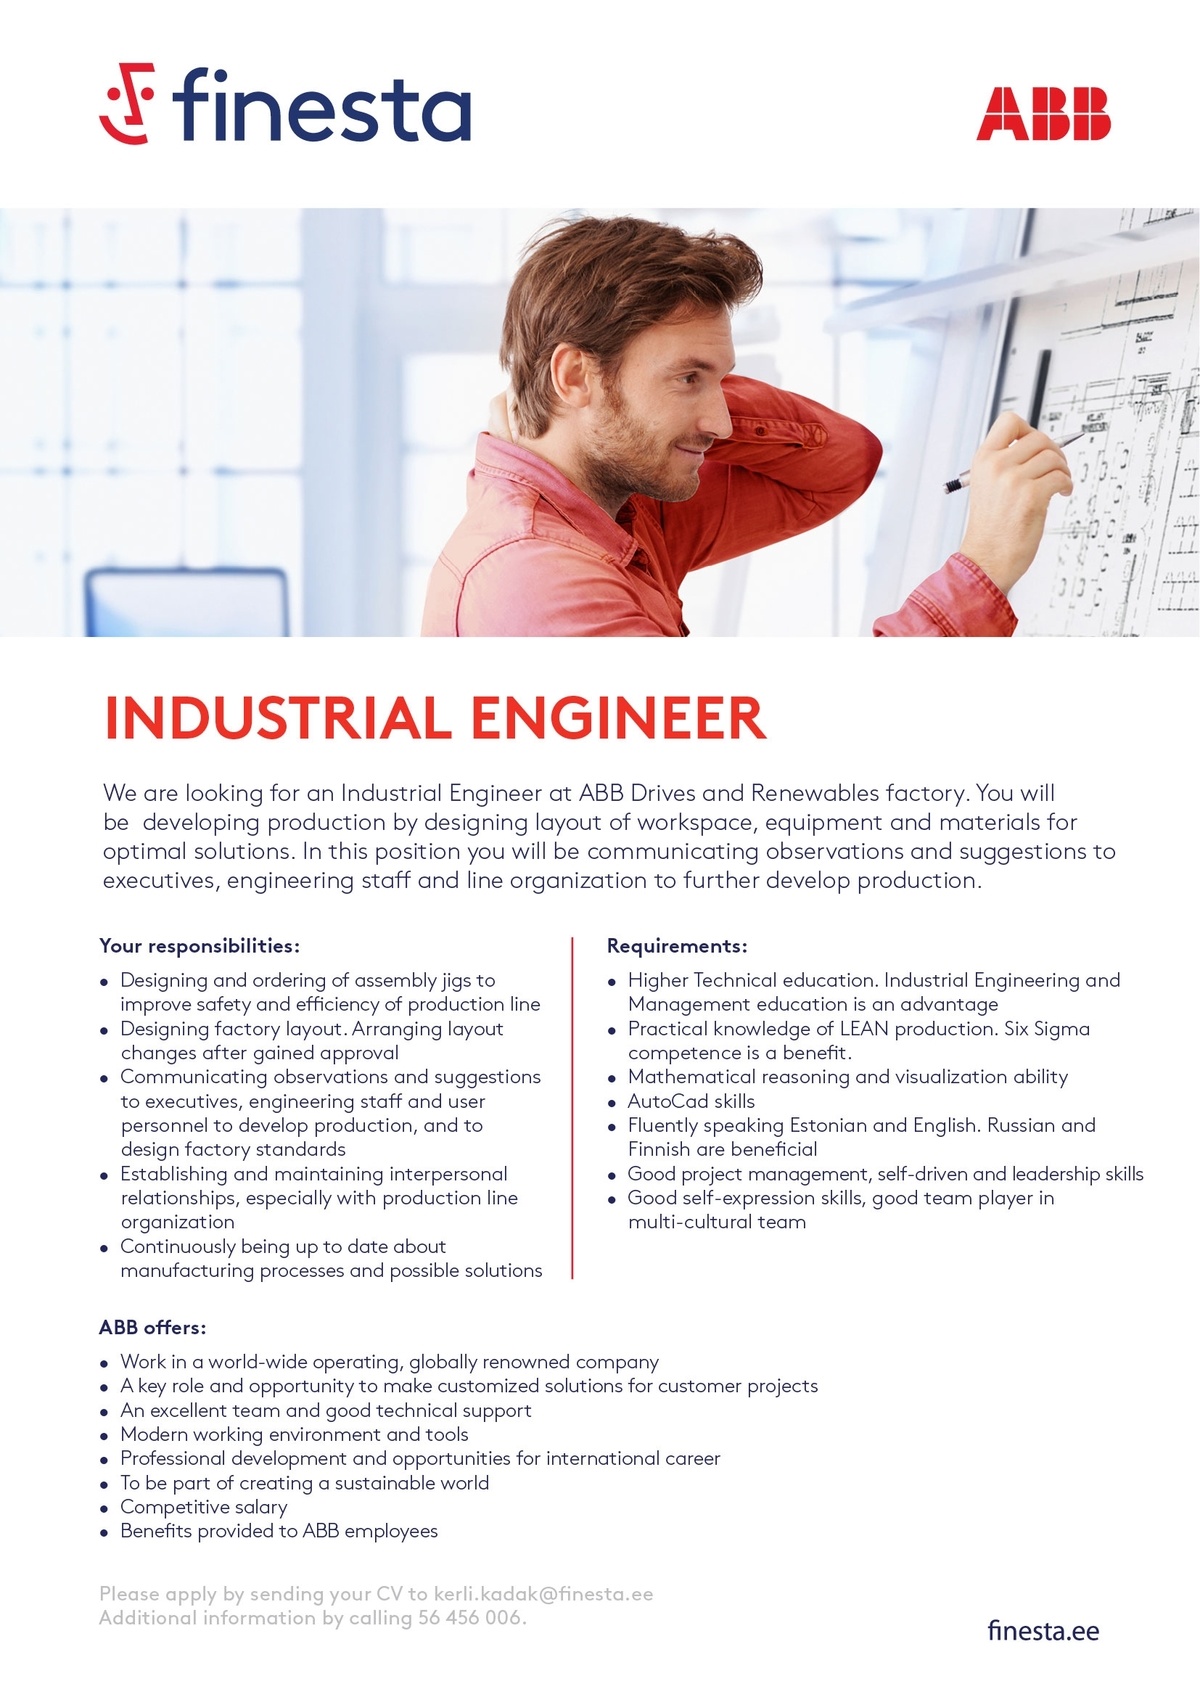 Finesta Baltic OÜ Industrial Engineer